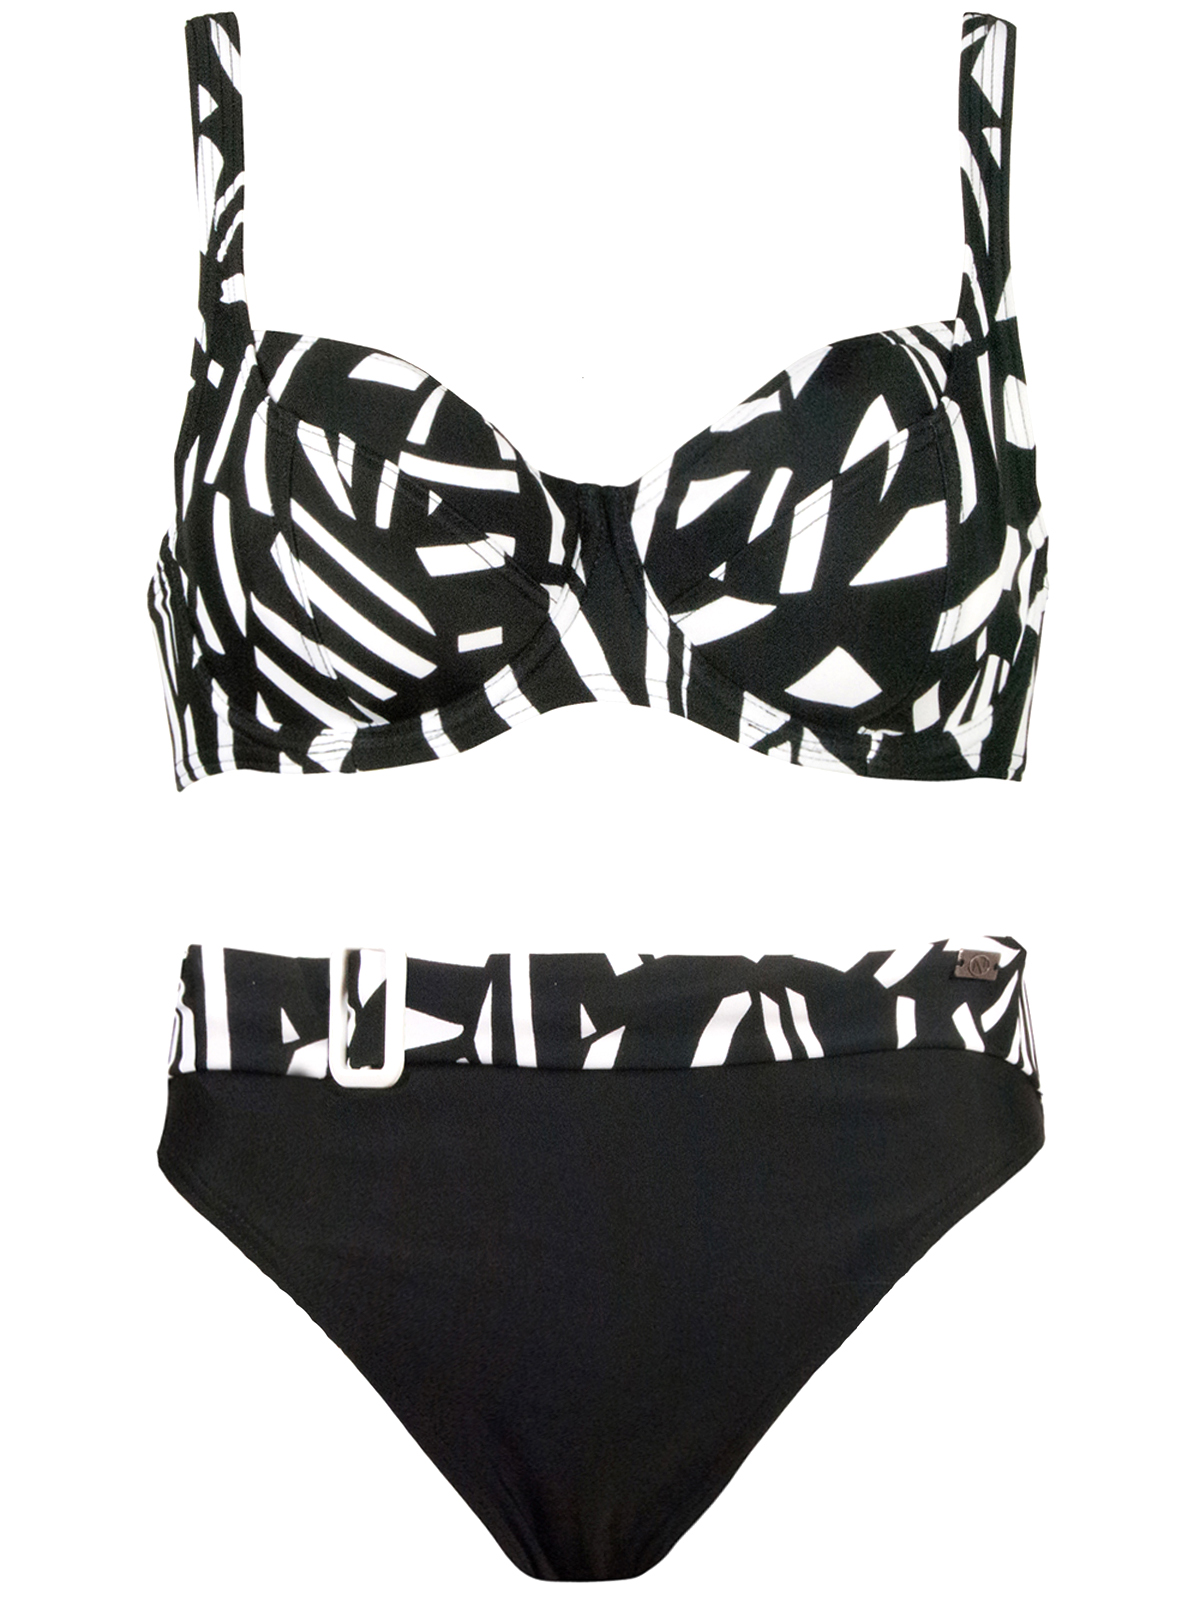 Naturana - - Naturana BLACK Printed Underwired Bikini Set - Size 10 (EU 38)